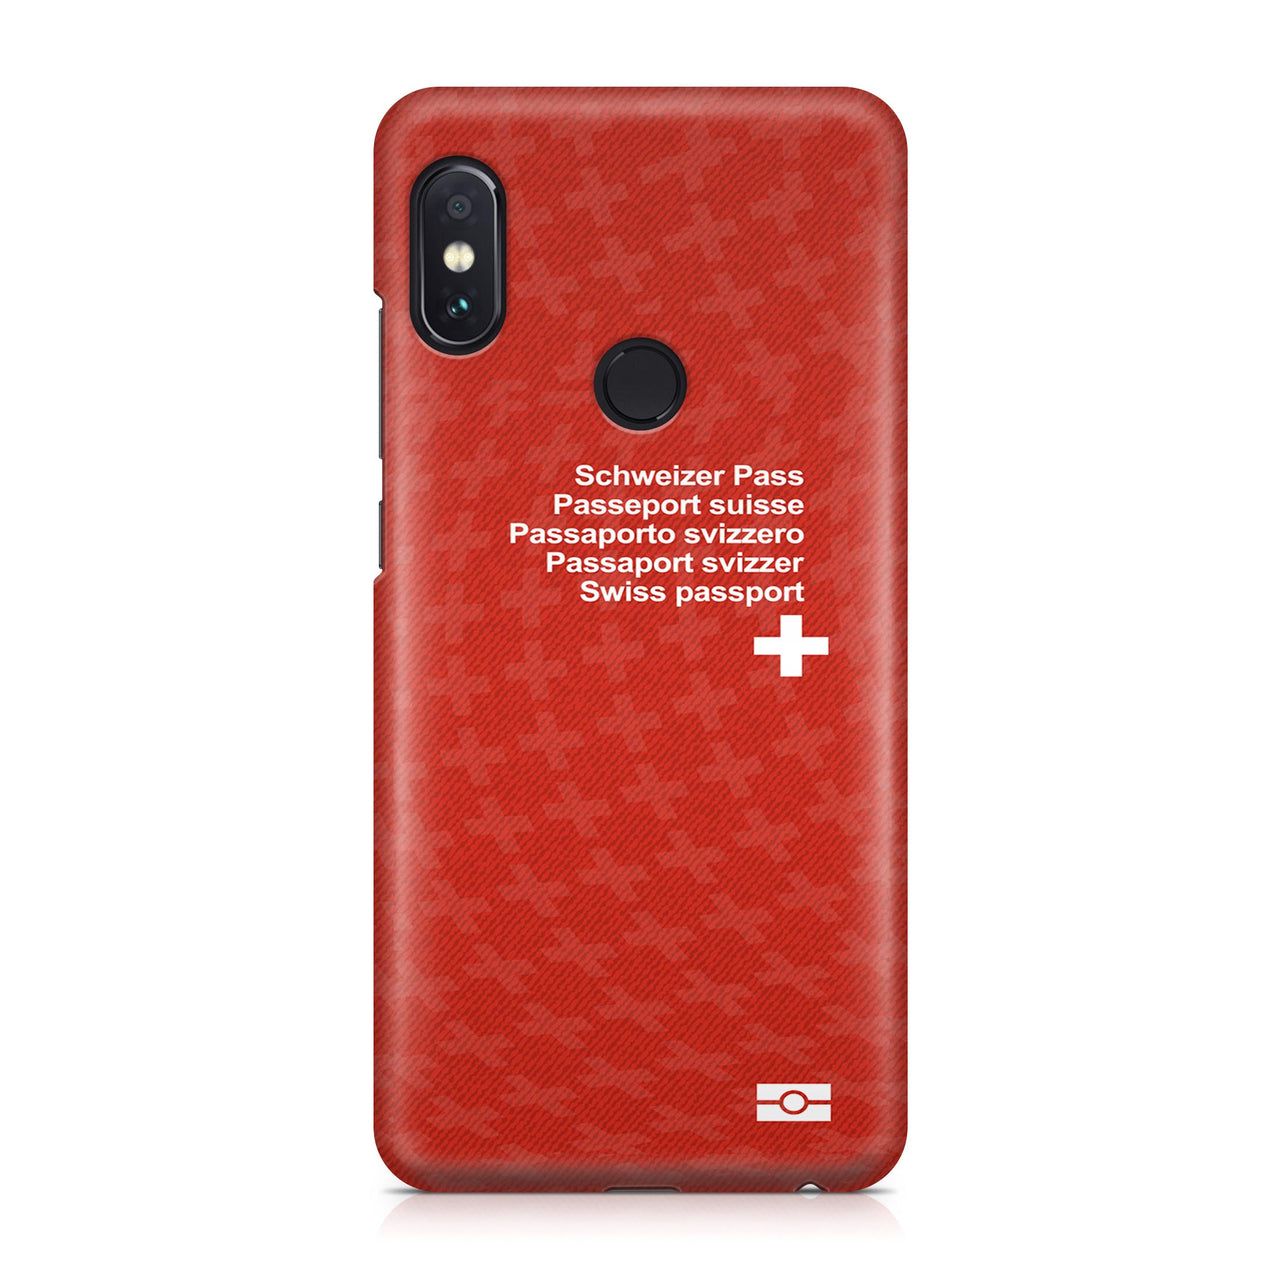 Switzerland Passport Designed Xiaomi Cases